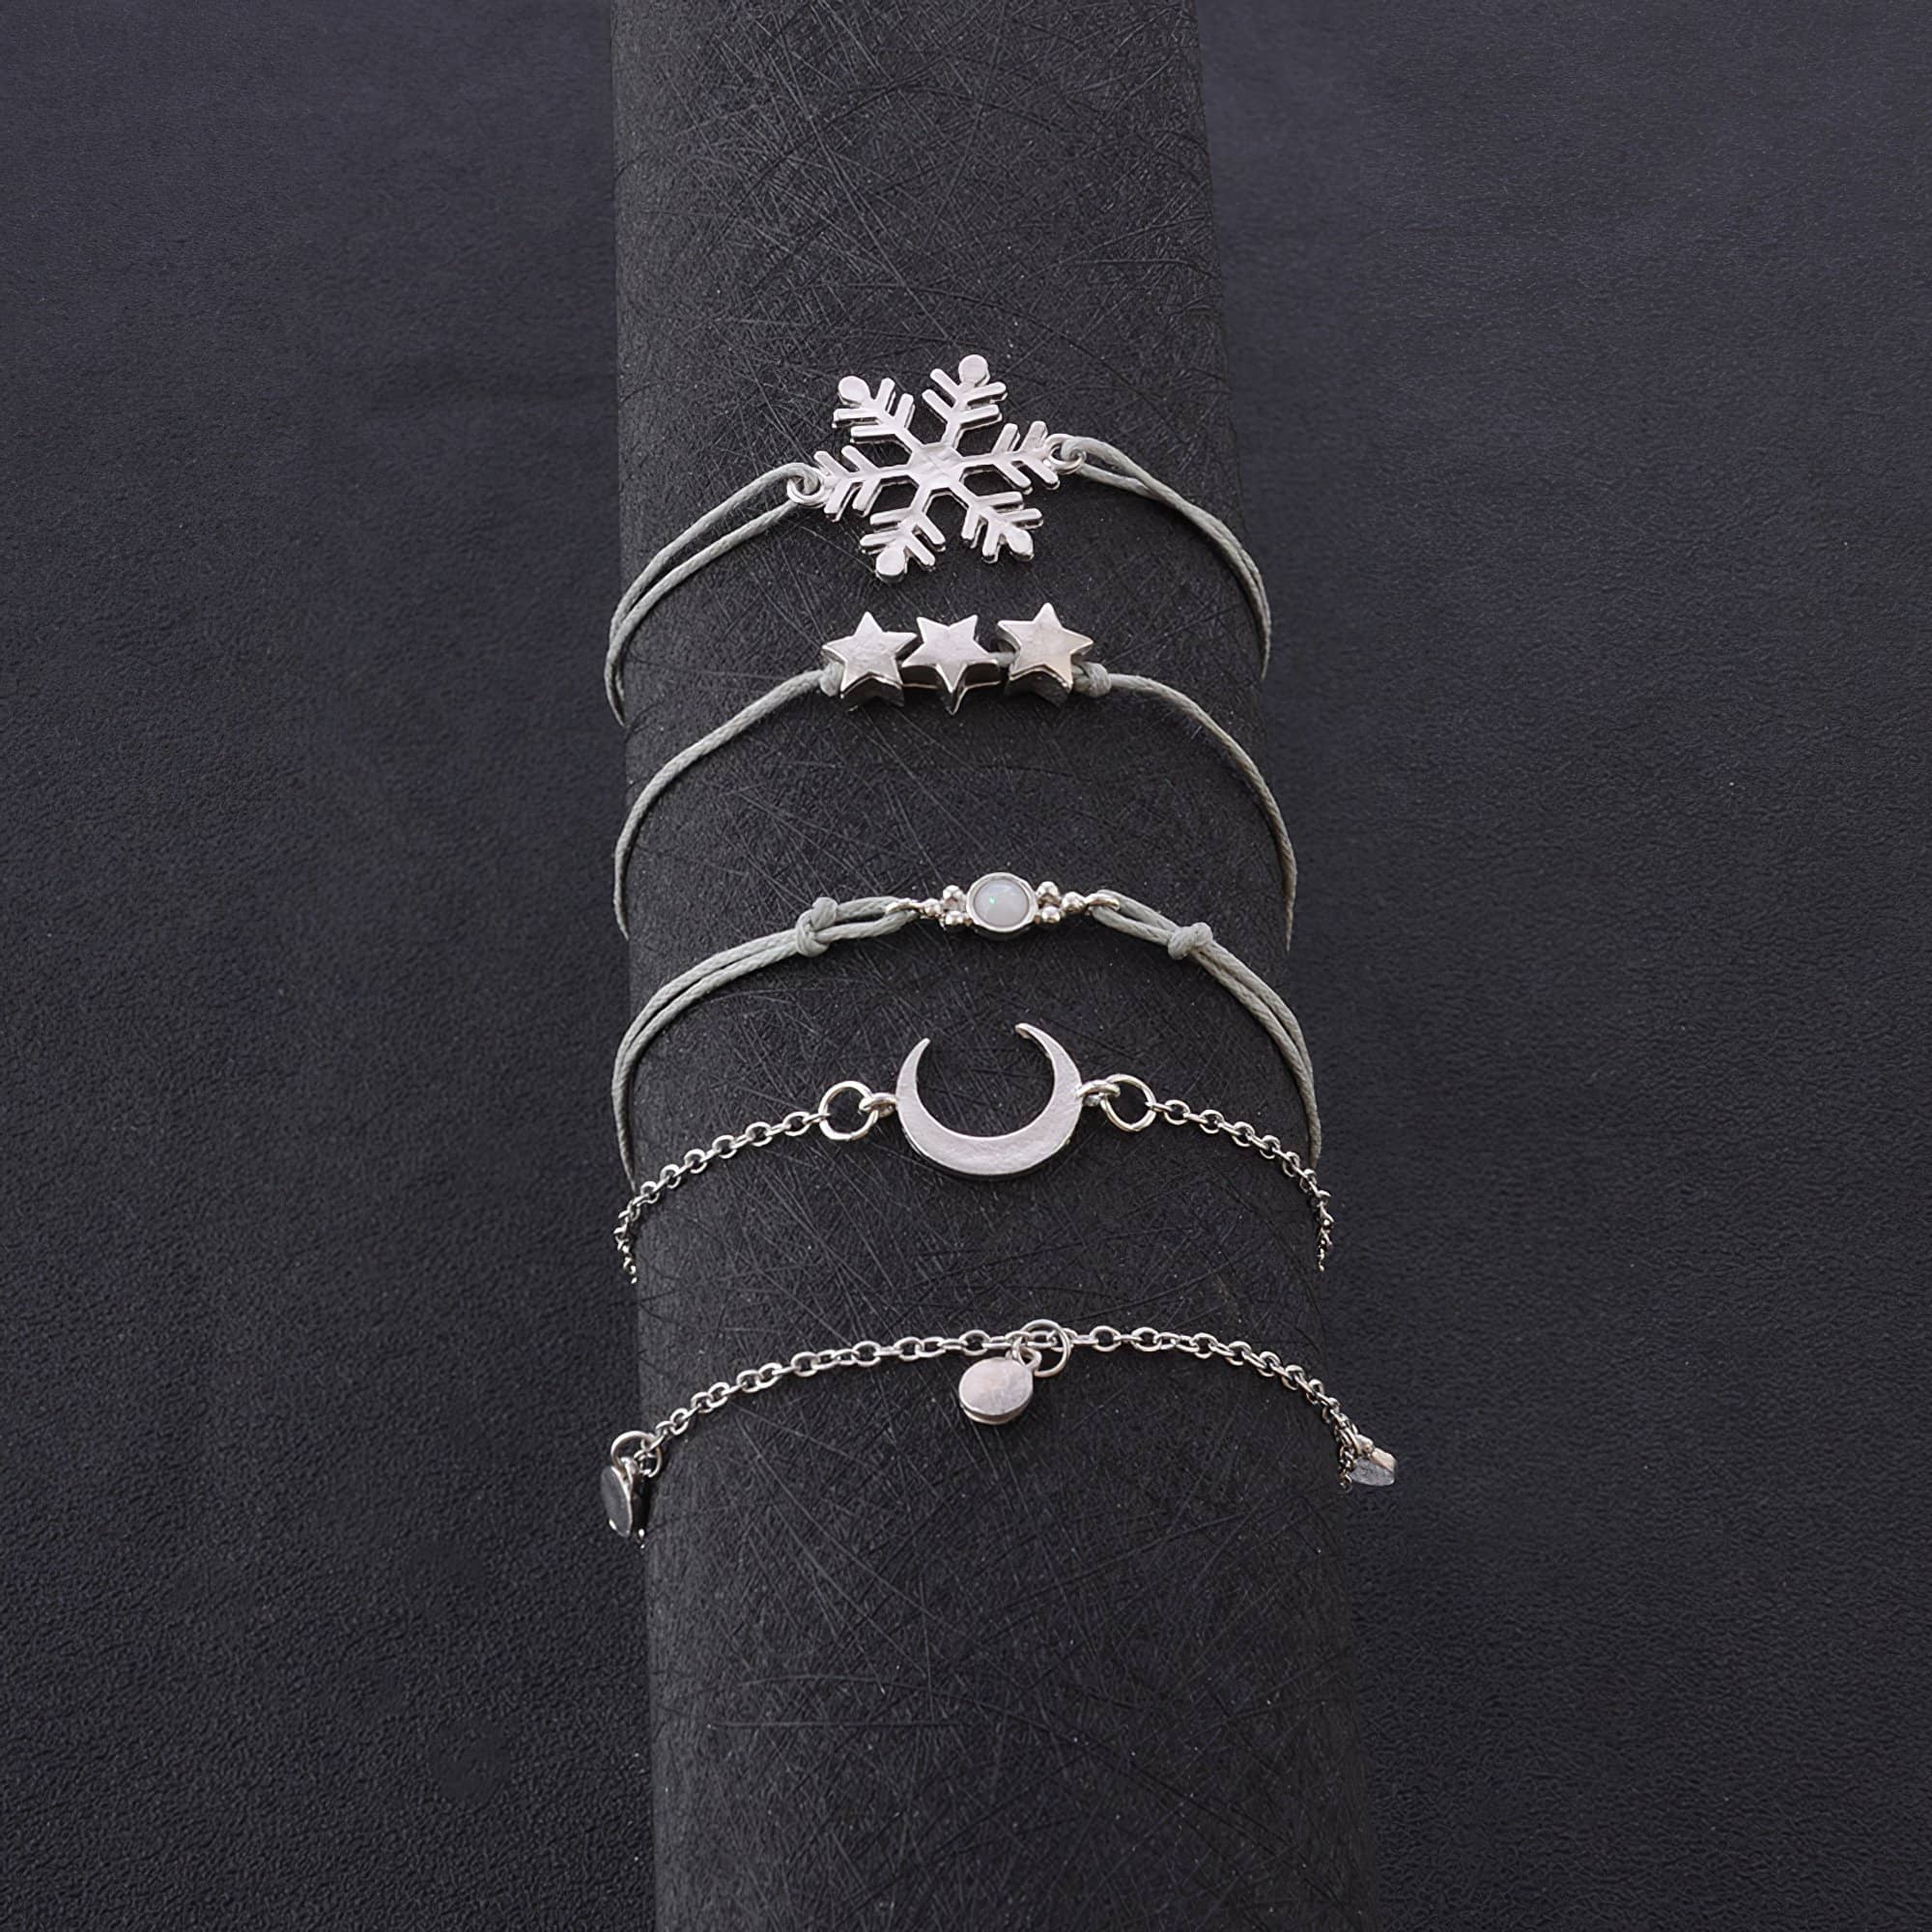 Multi Layer Bracelet "Snowflake Moon Stars" Free Shipping! (4421320999006)